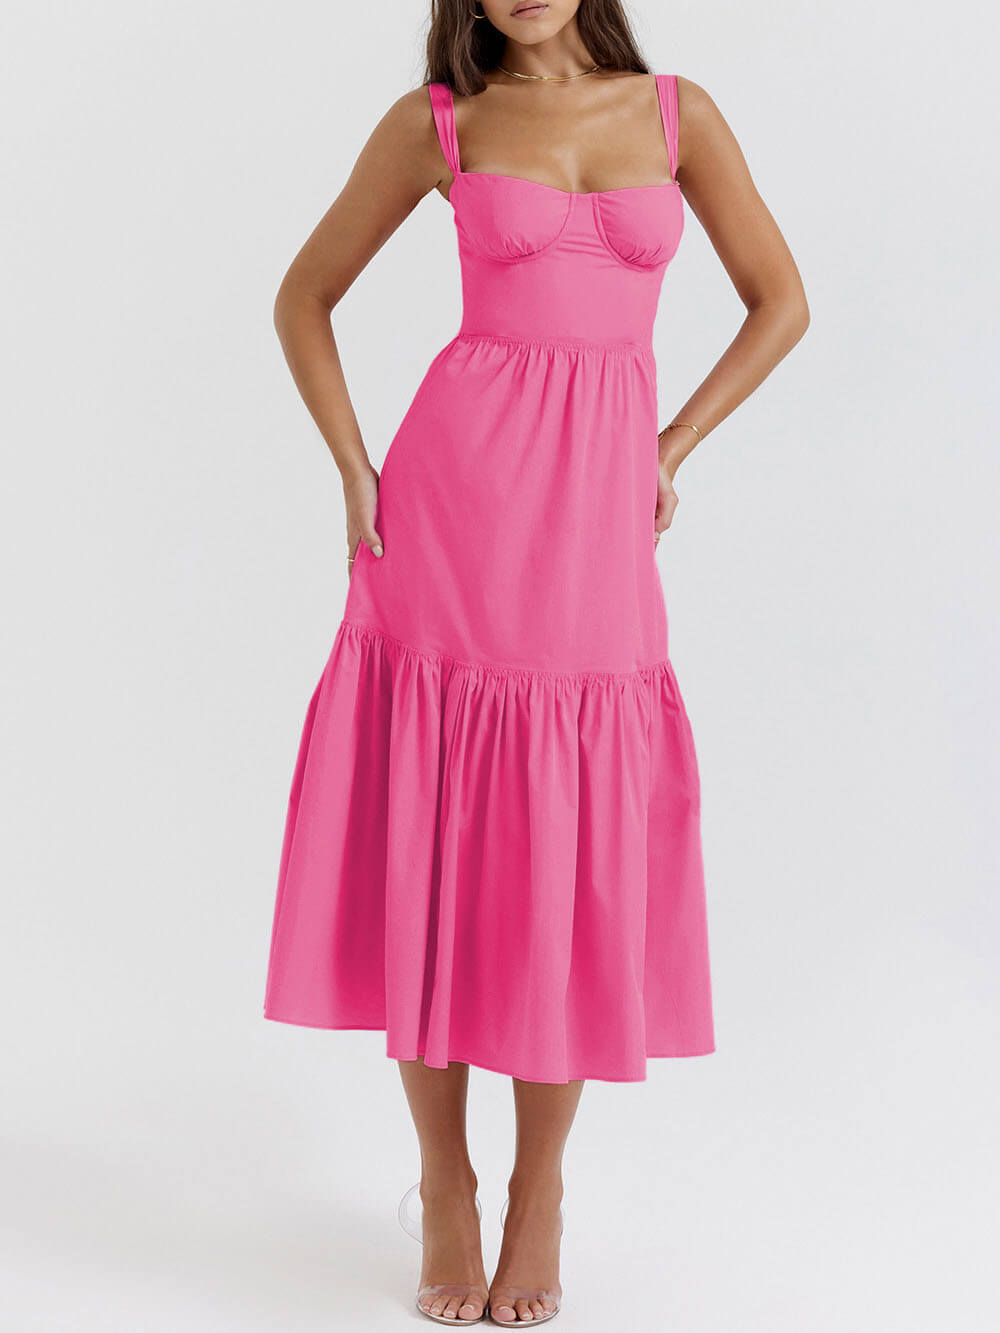 Strap Solid Color A-Hem Midi Dress